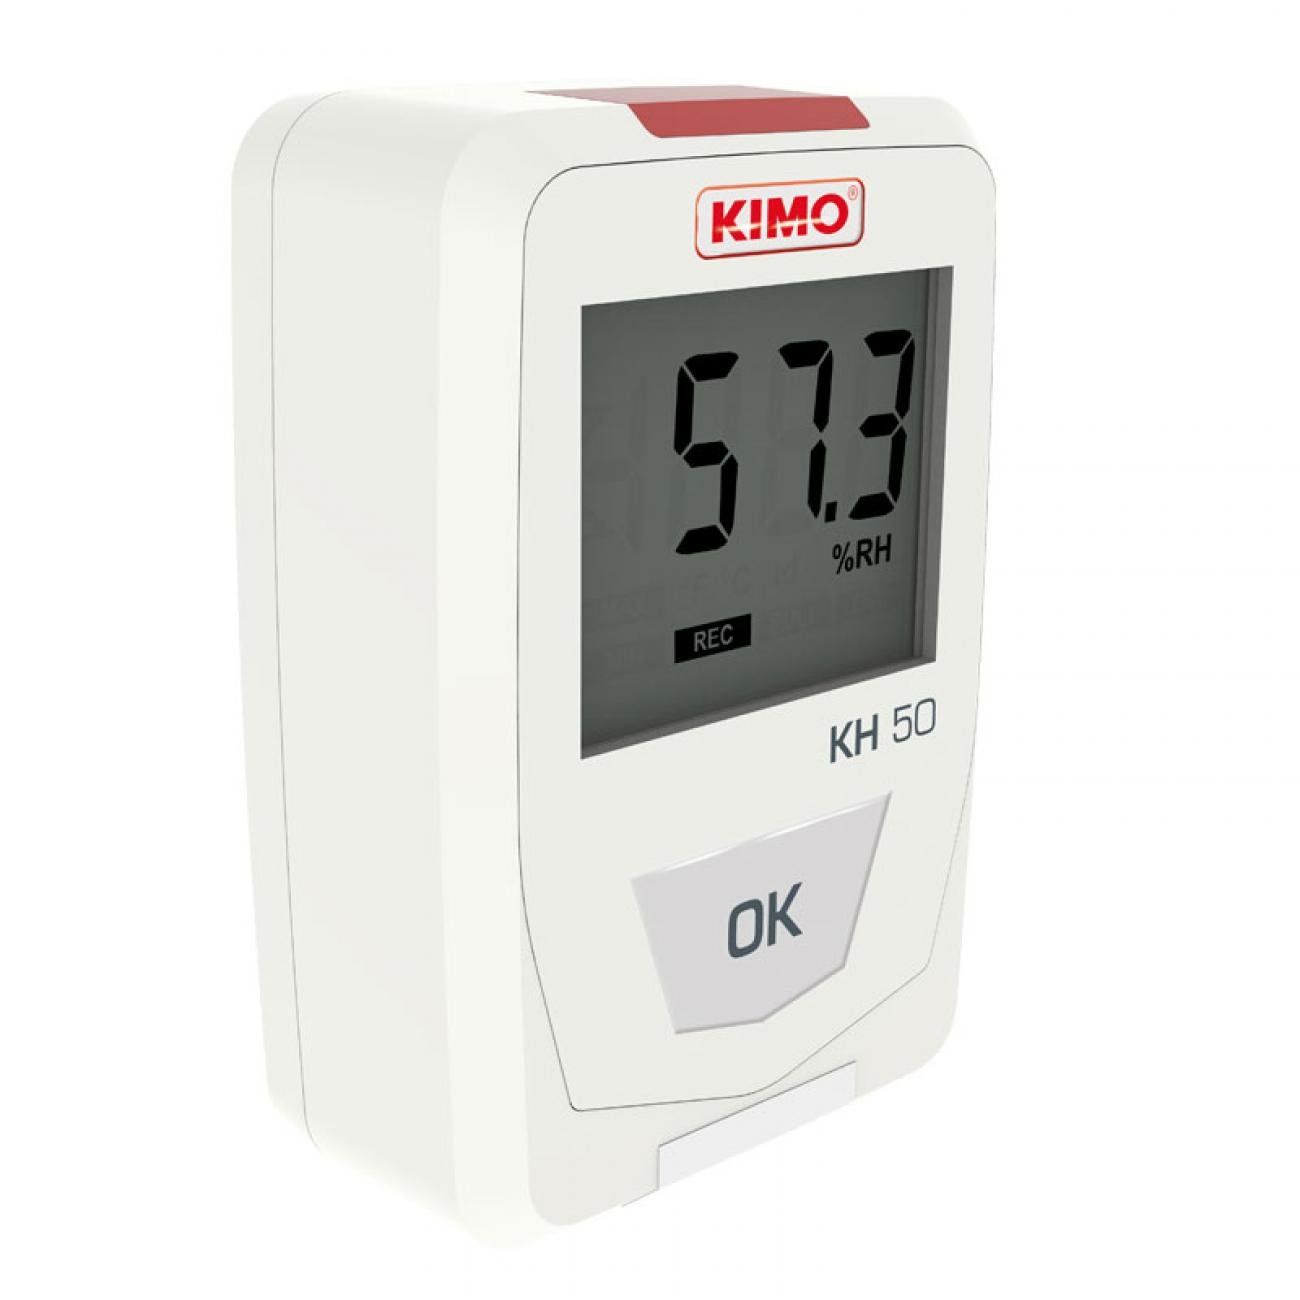 Data Logger KT50 for temperature monitoring during transporation or storage